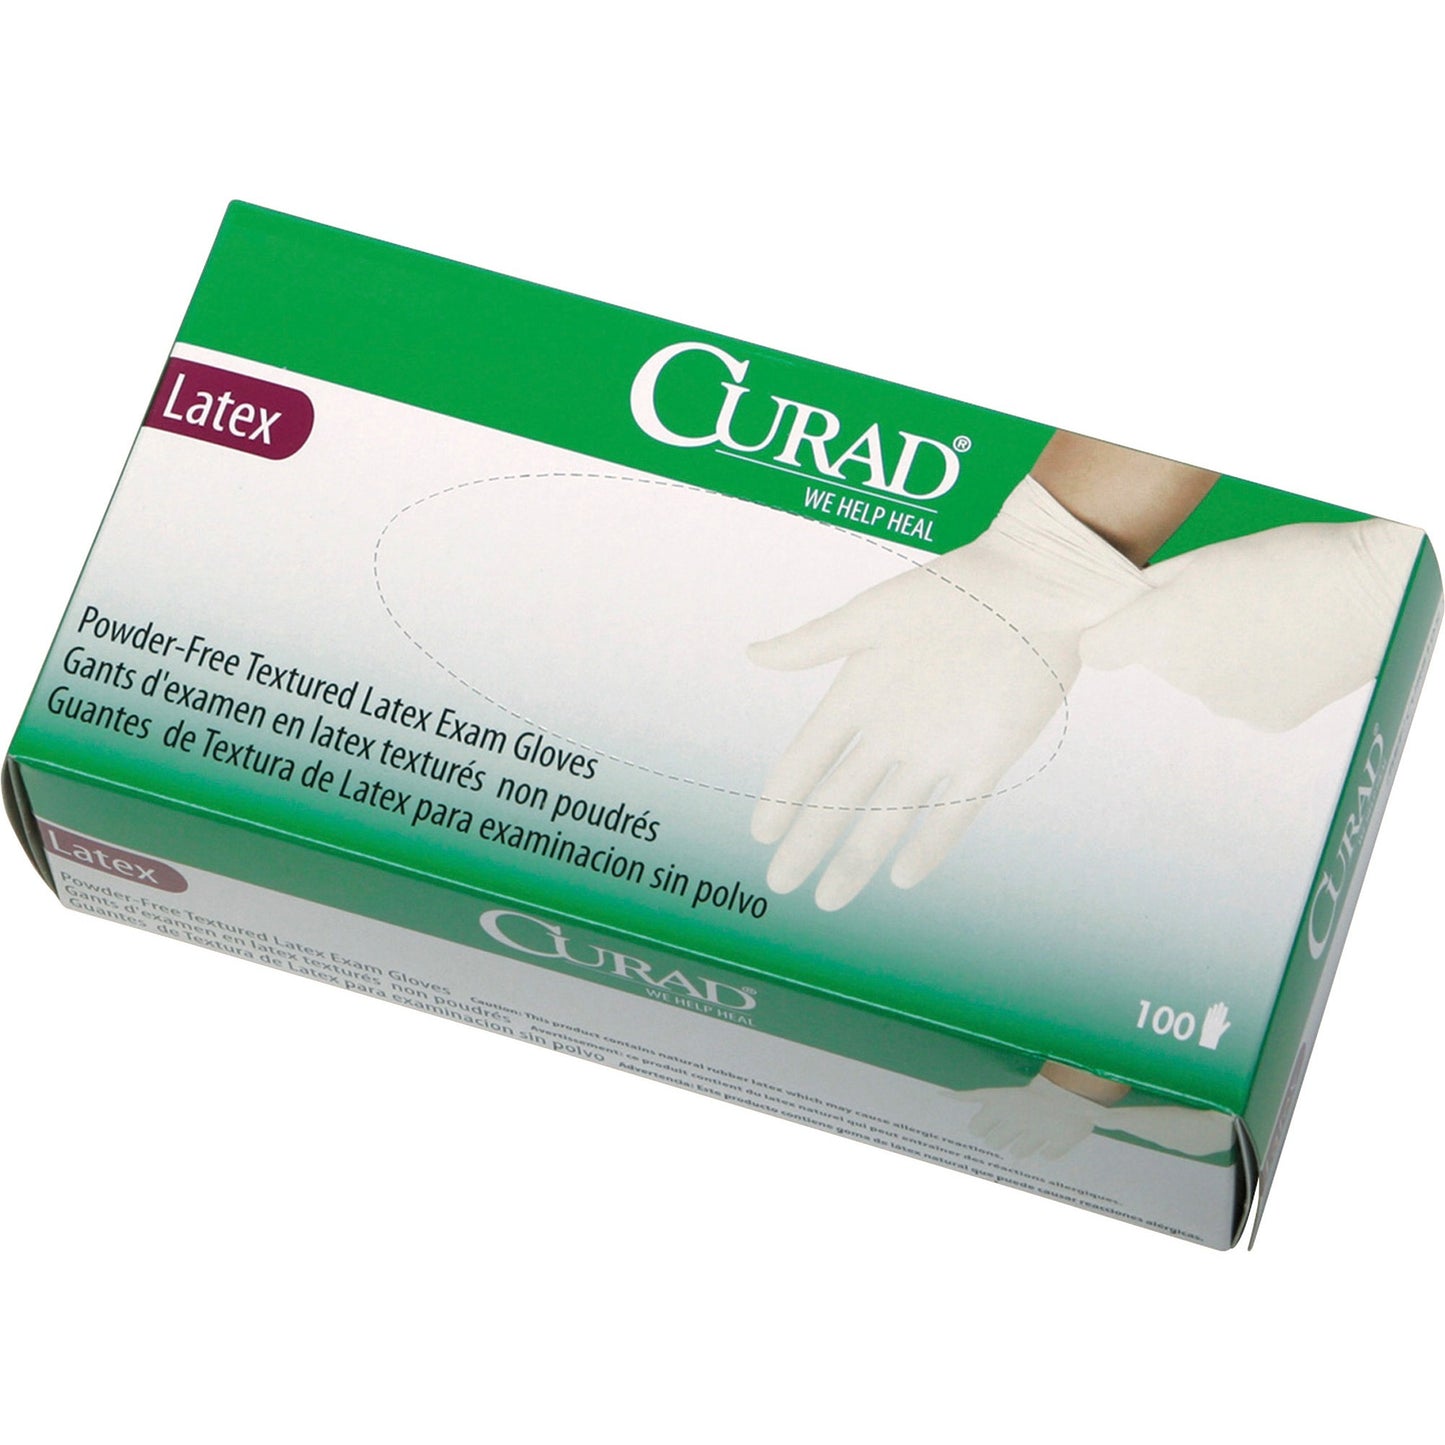 Curad Latex Exam Powder-Free Gloves Beige Large (100 Gloves) CUR8106